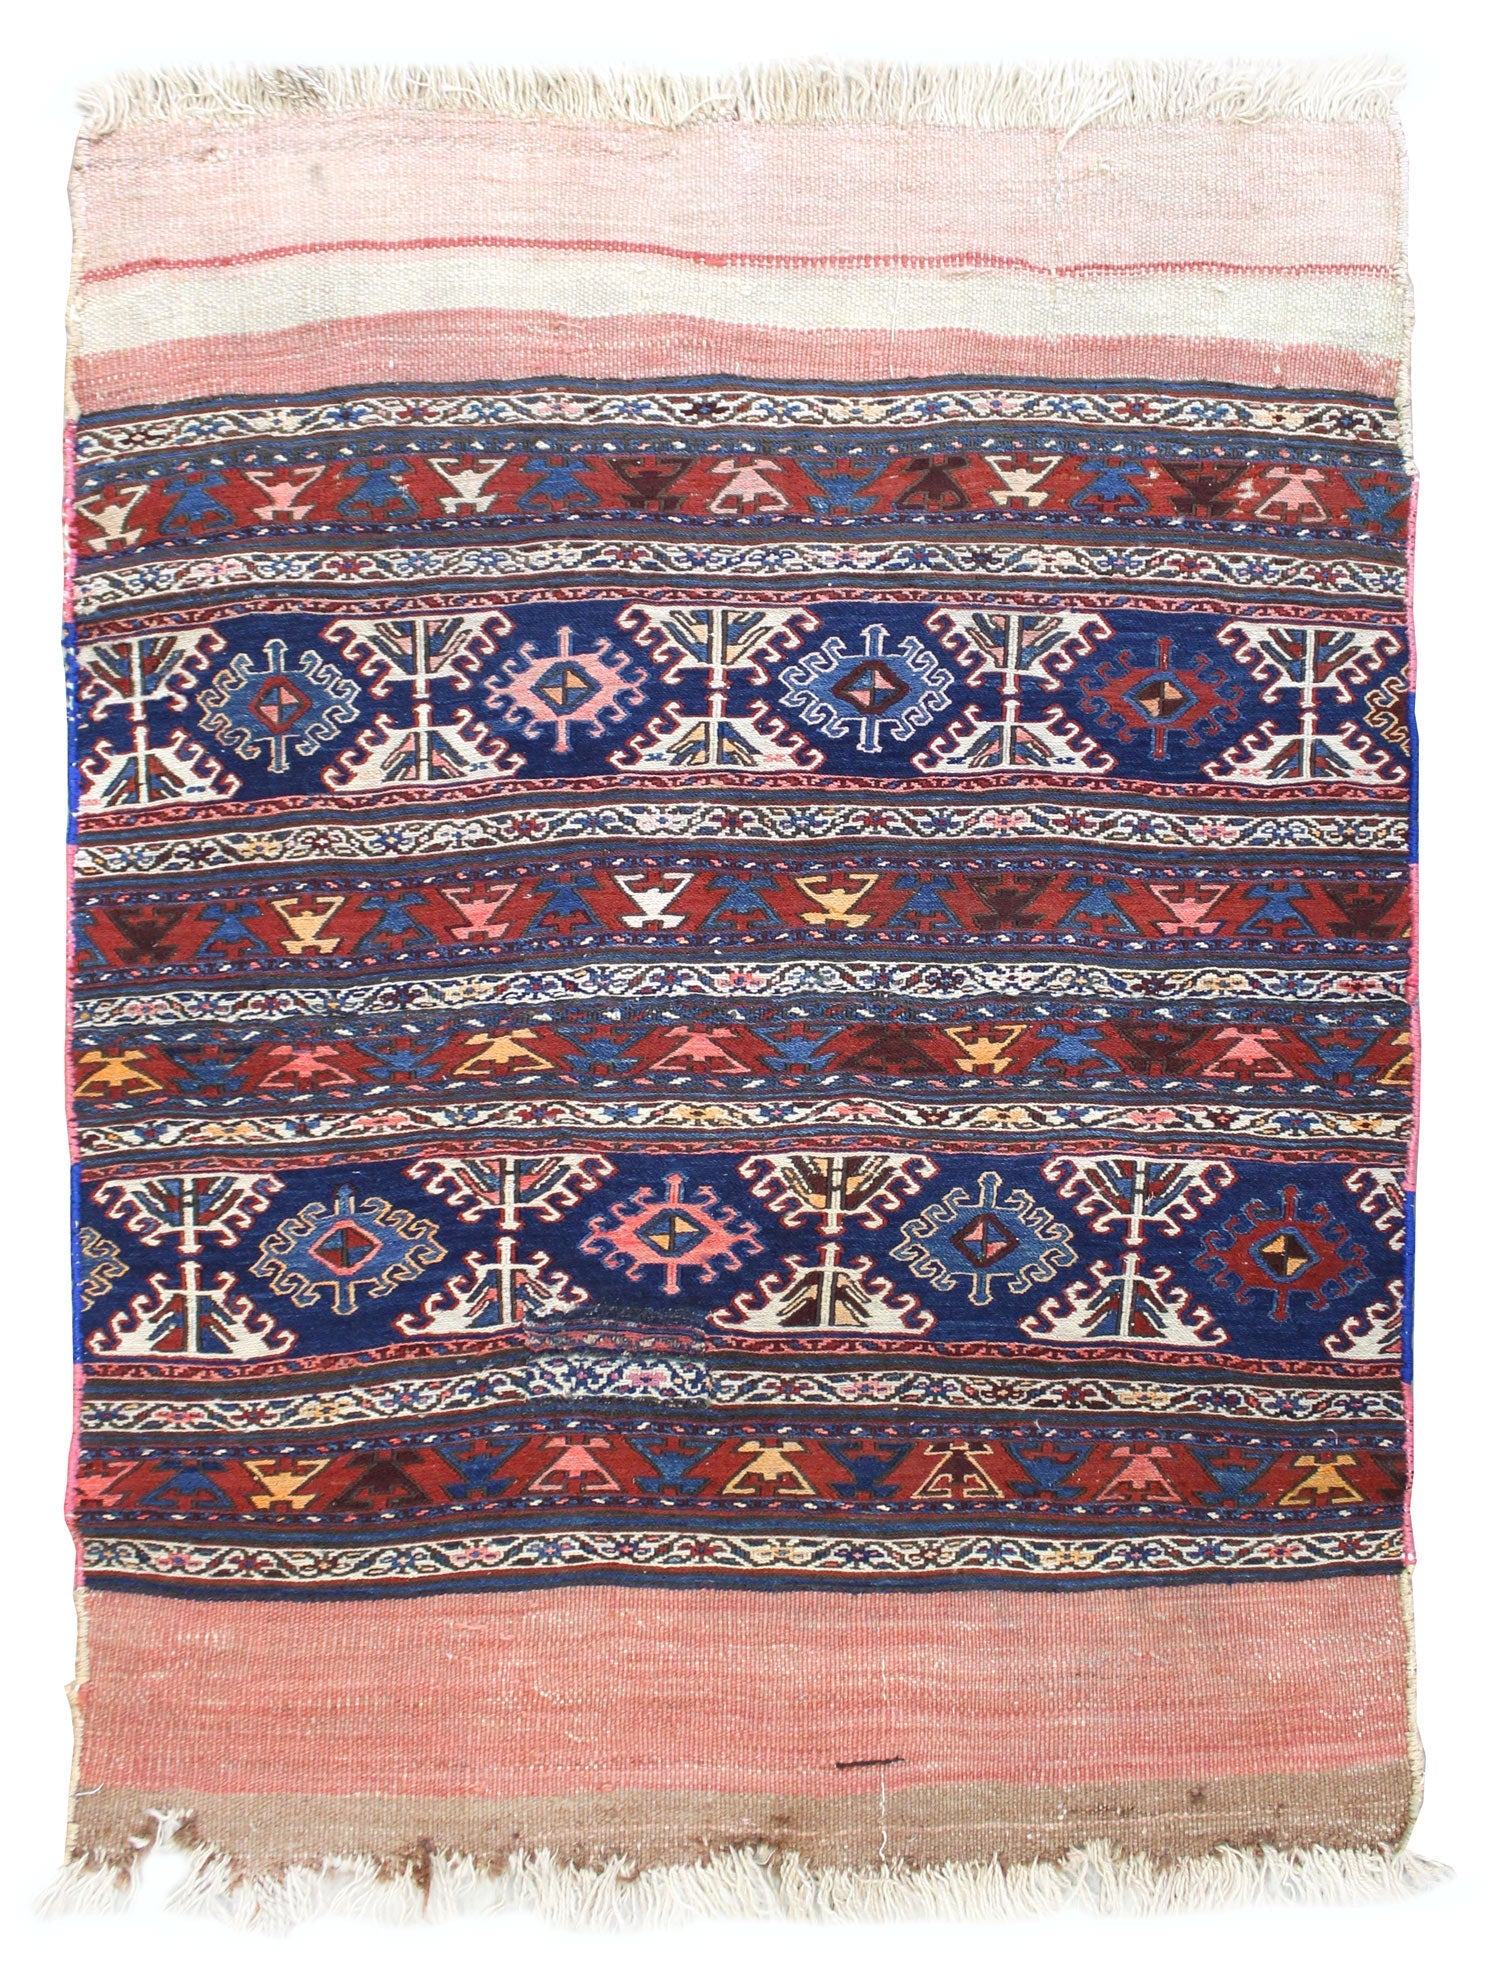 Antique Shasavan Kilim Handwoven Tribal Rug